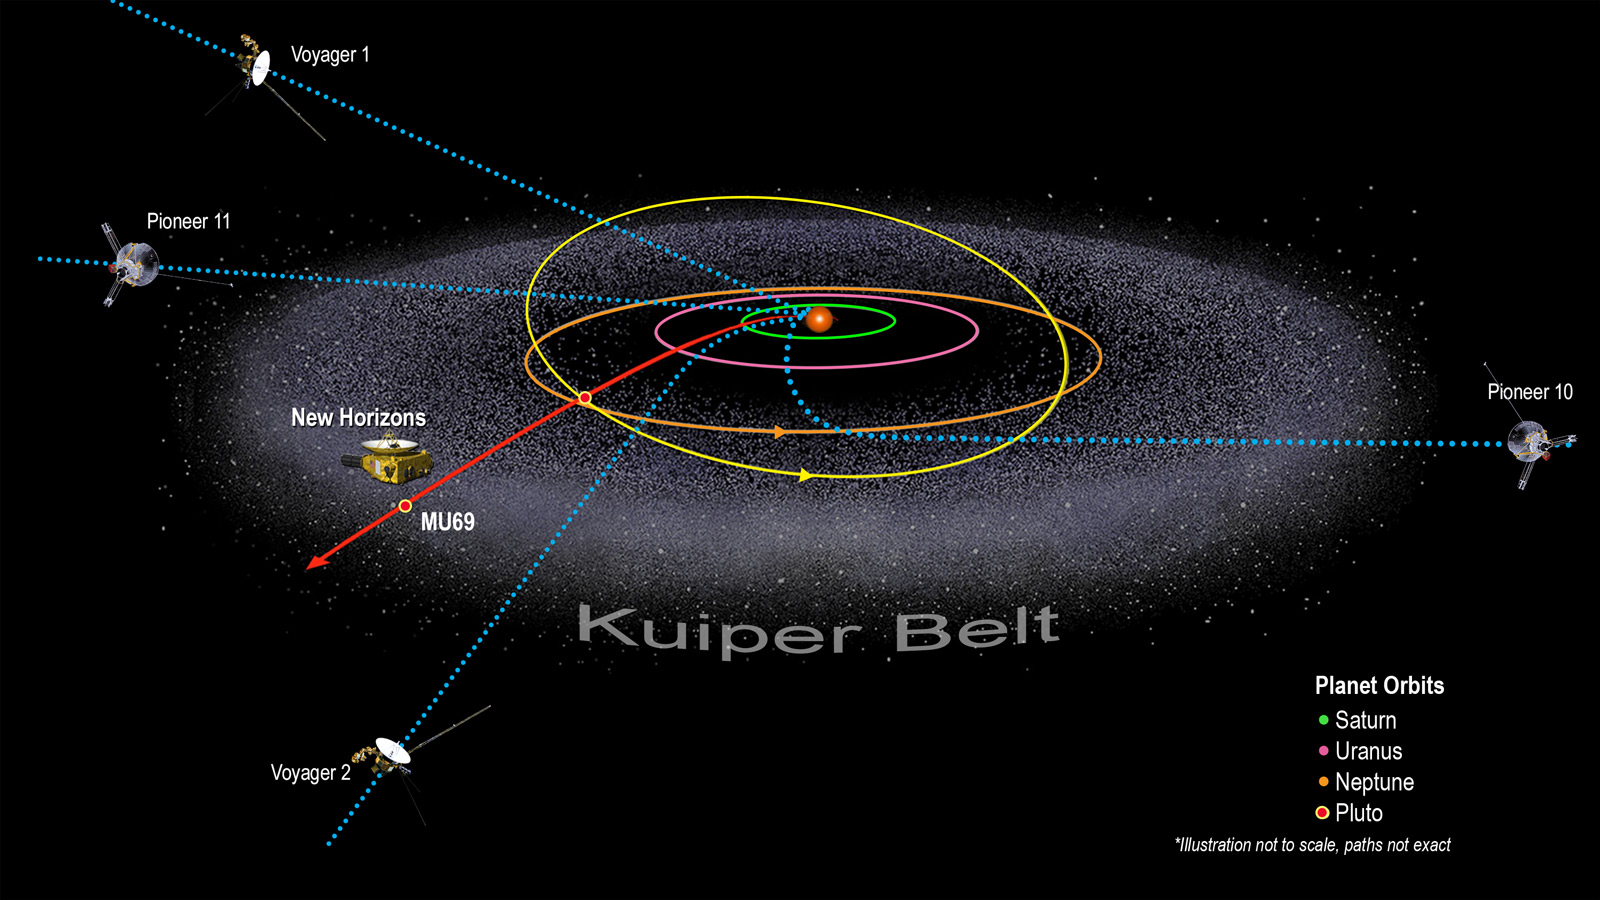 Illustration of Kuiper Belt and Spacecraft locations